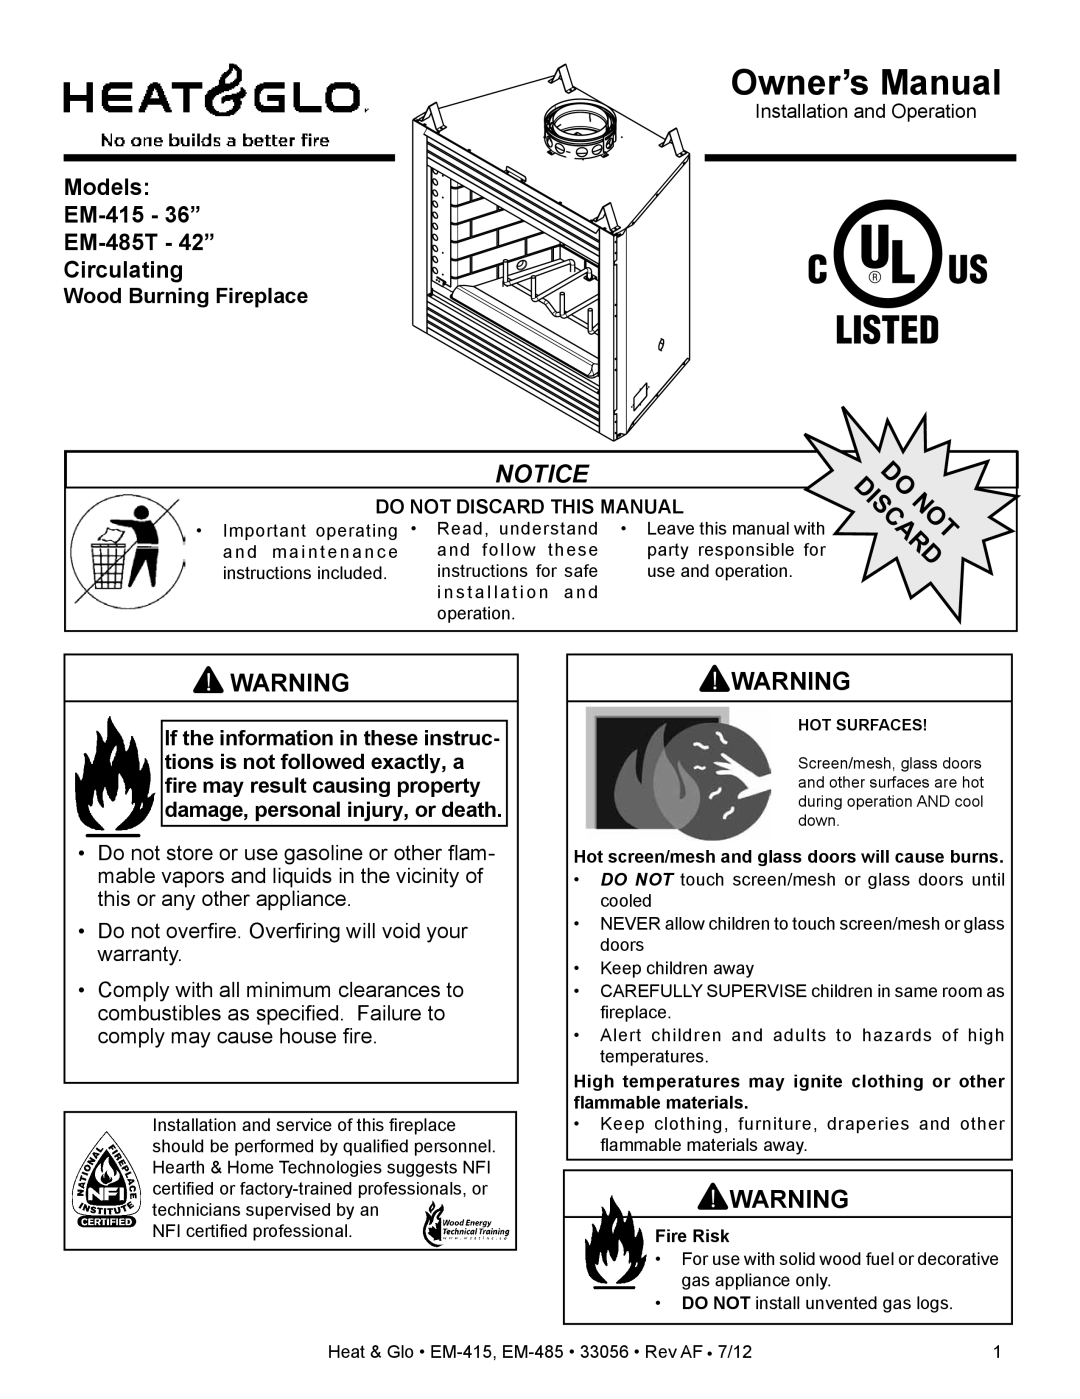 Heat & Glo LifeStyle EM-485T - 42, EM-415 - 36 owner manual Wood Burning Fireplace, Owner’s Manual, Notice 